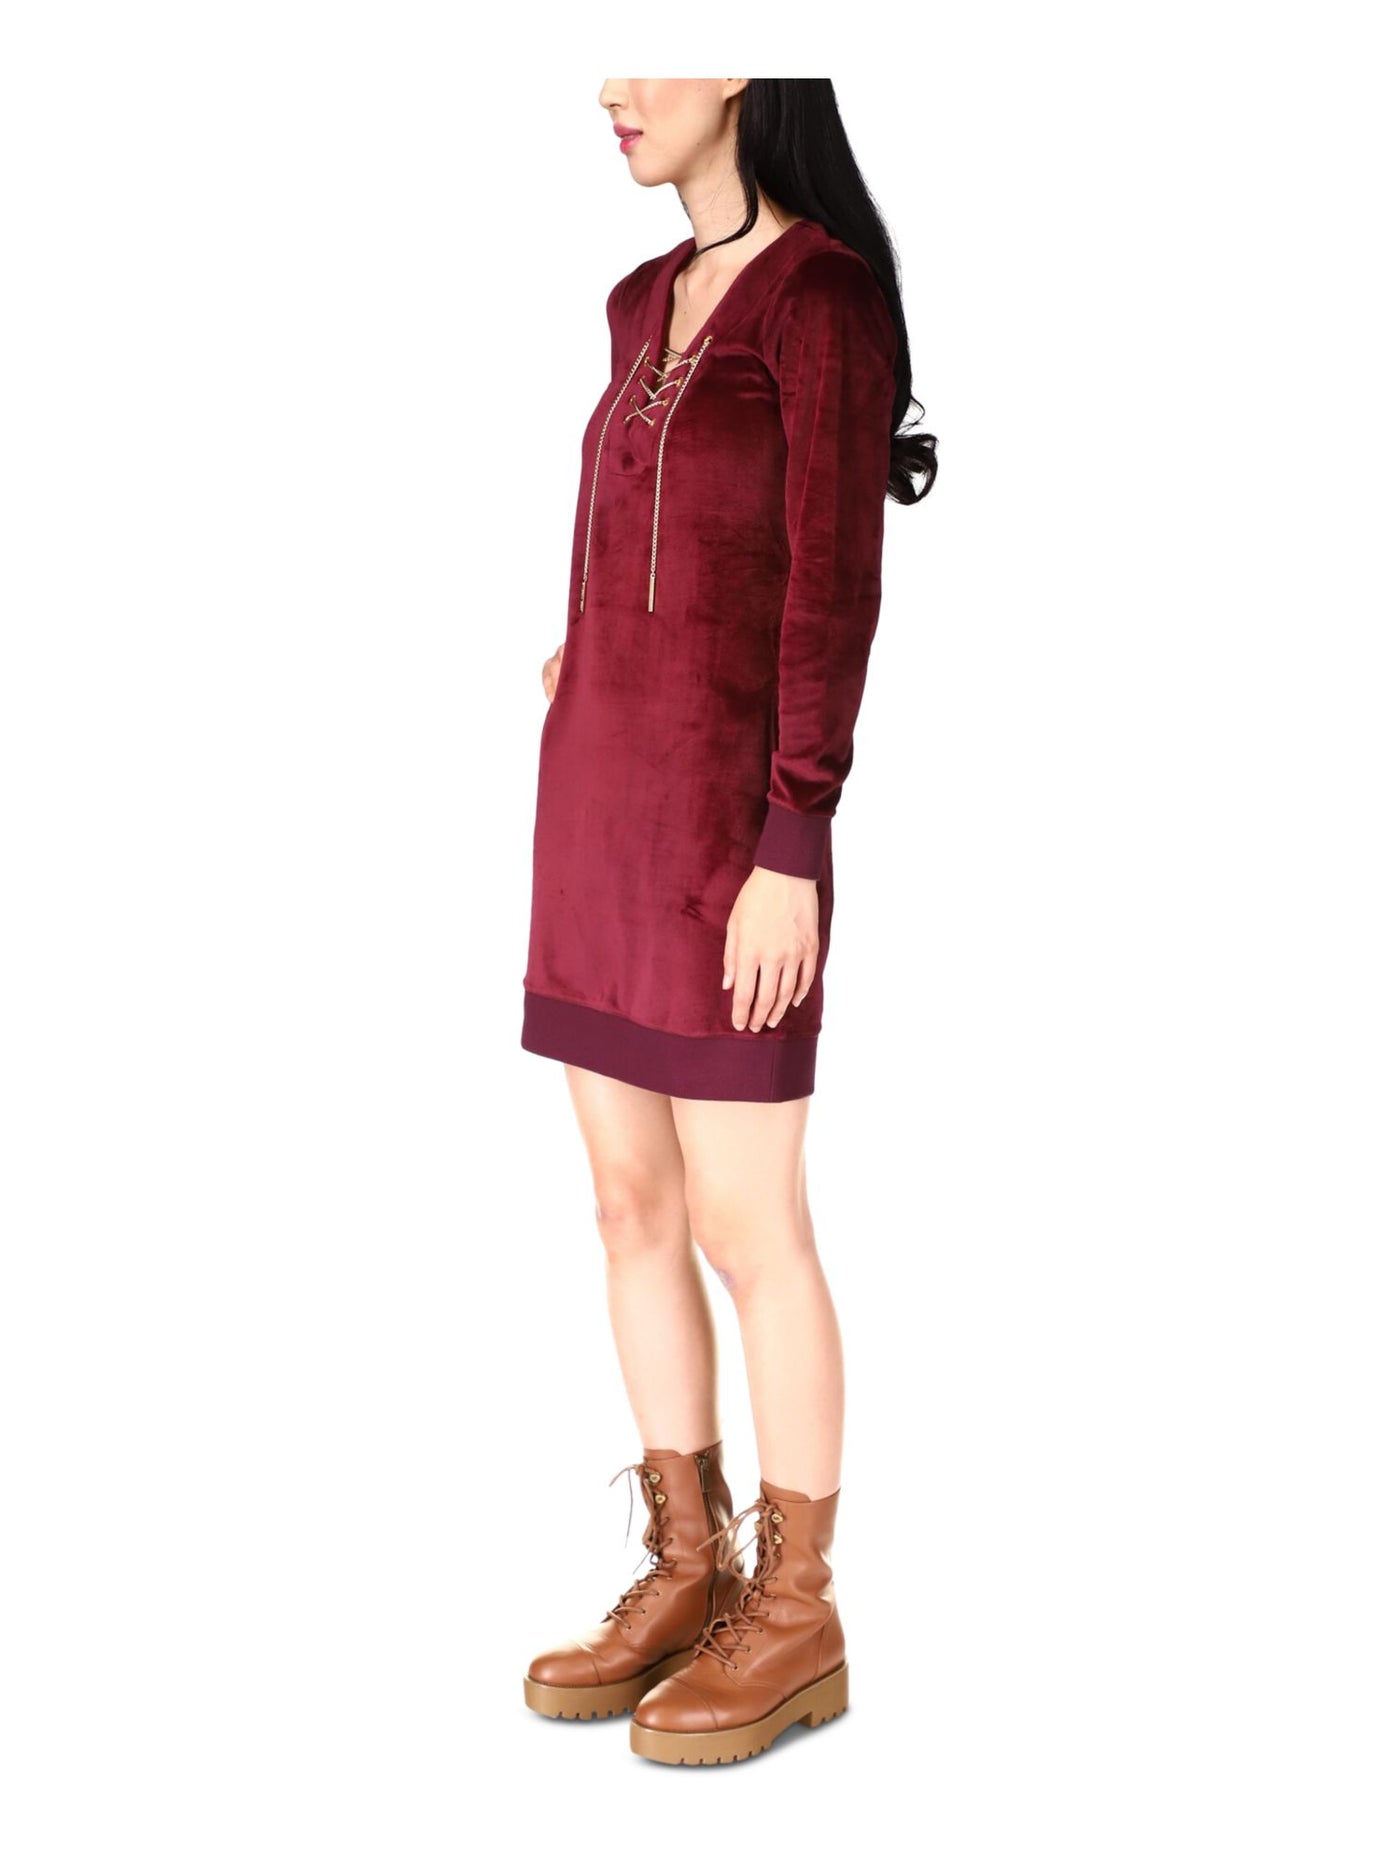 MICHAEL MICHAEL KORS Womens Burgundy Unlined Long Sleeve V Neck Above The Knee Tunic Dress XL